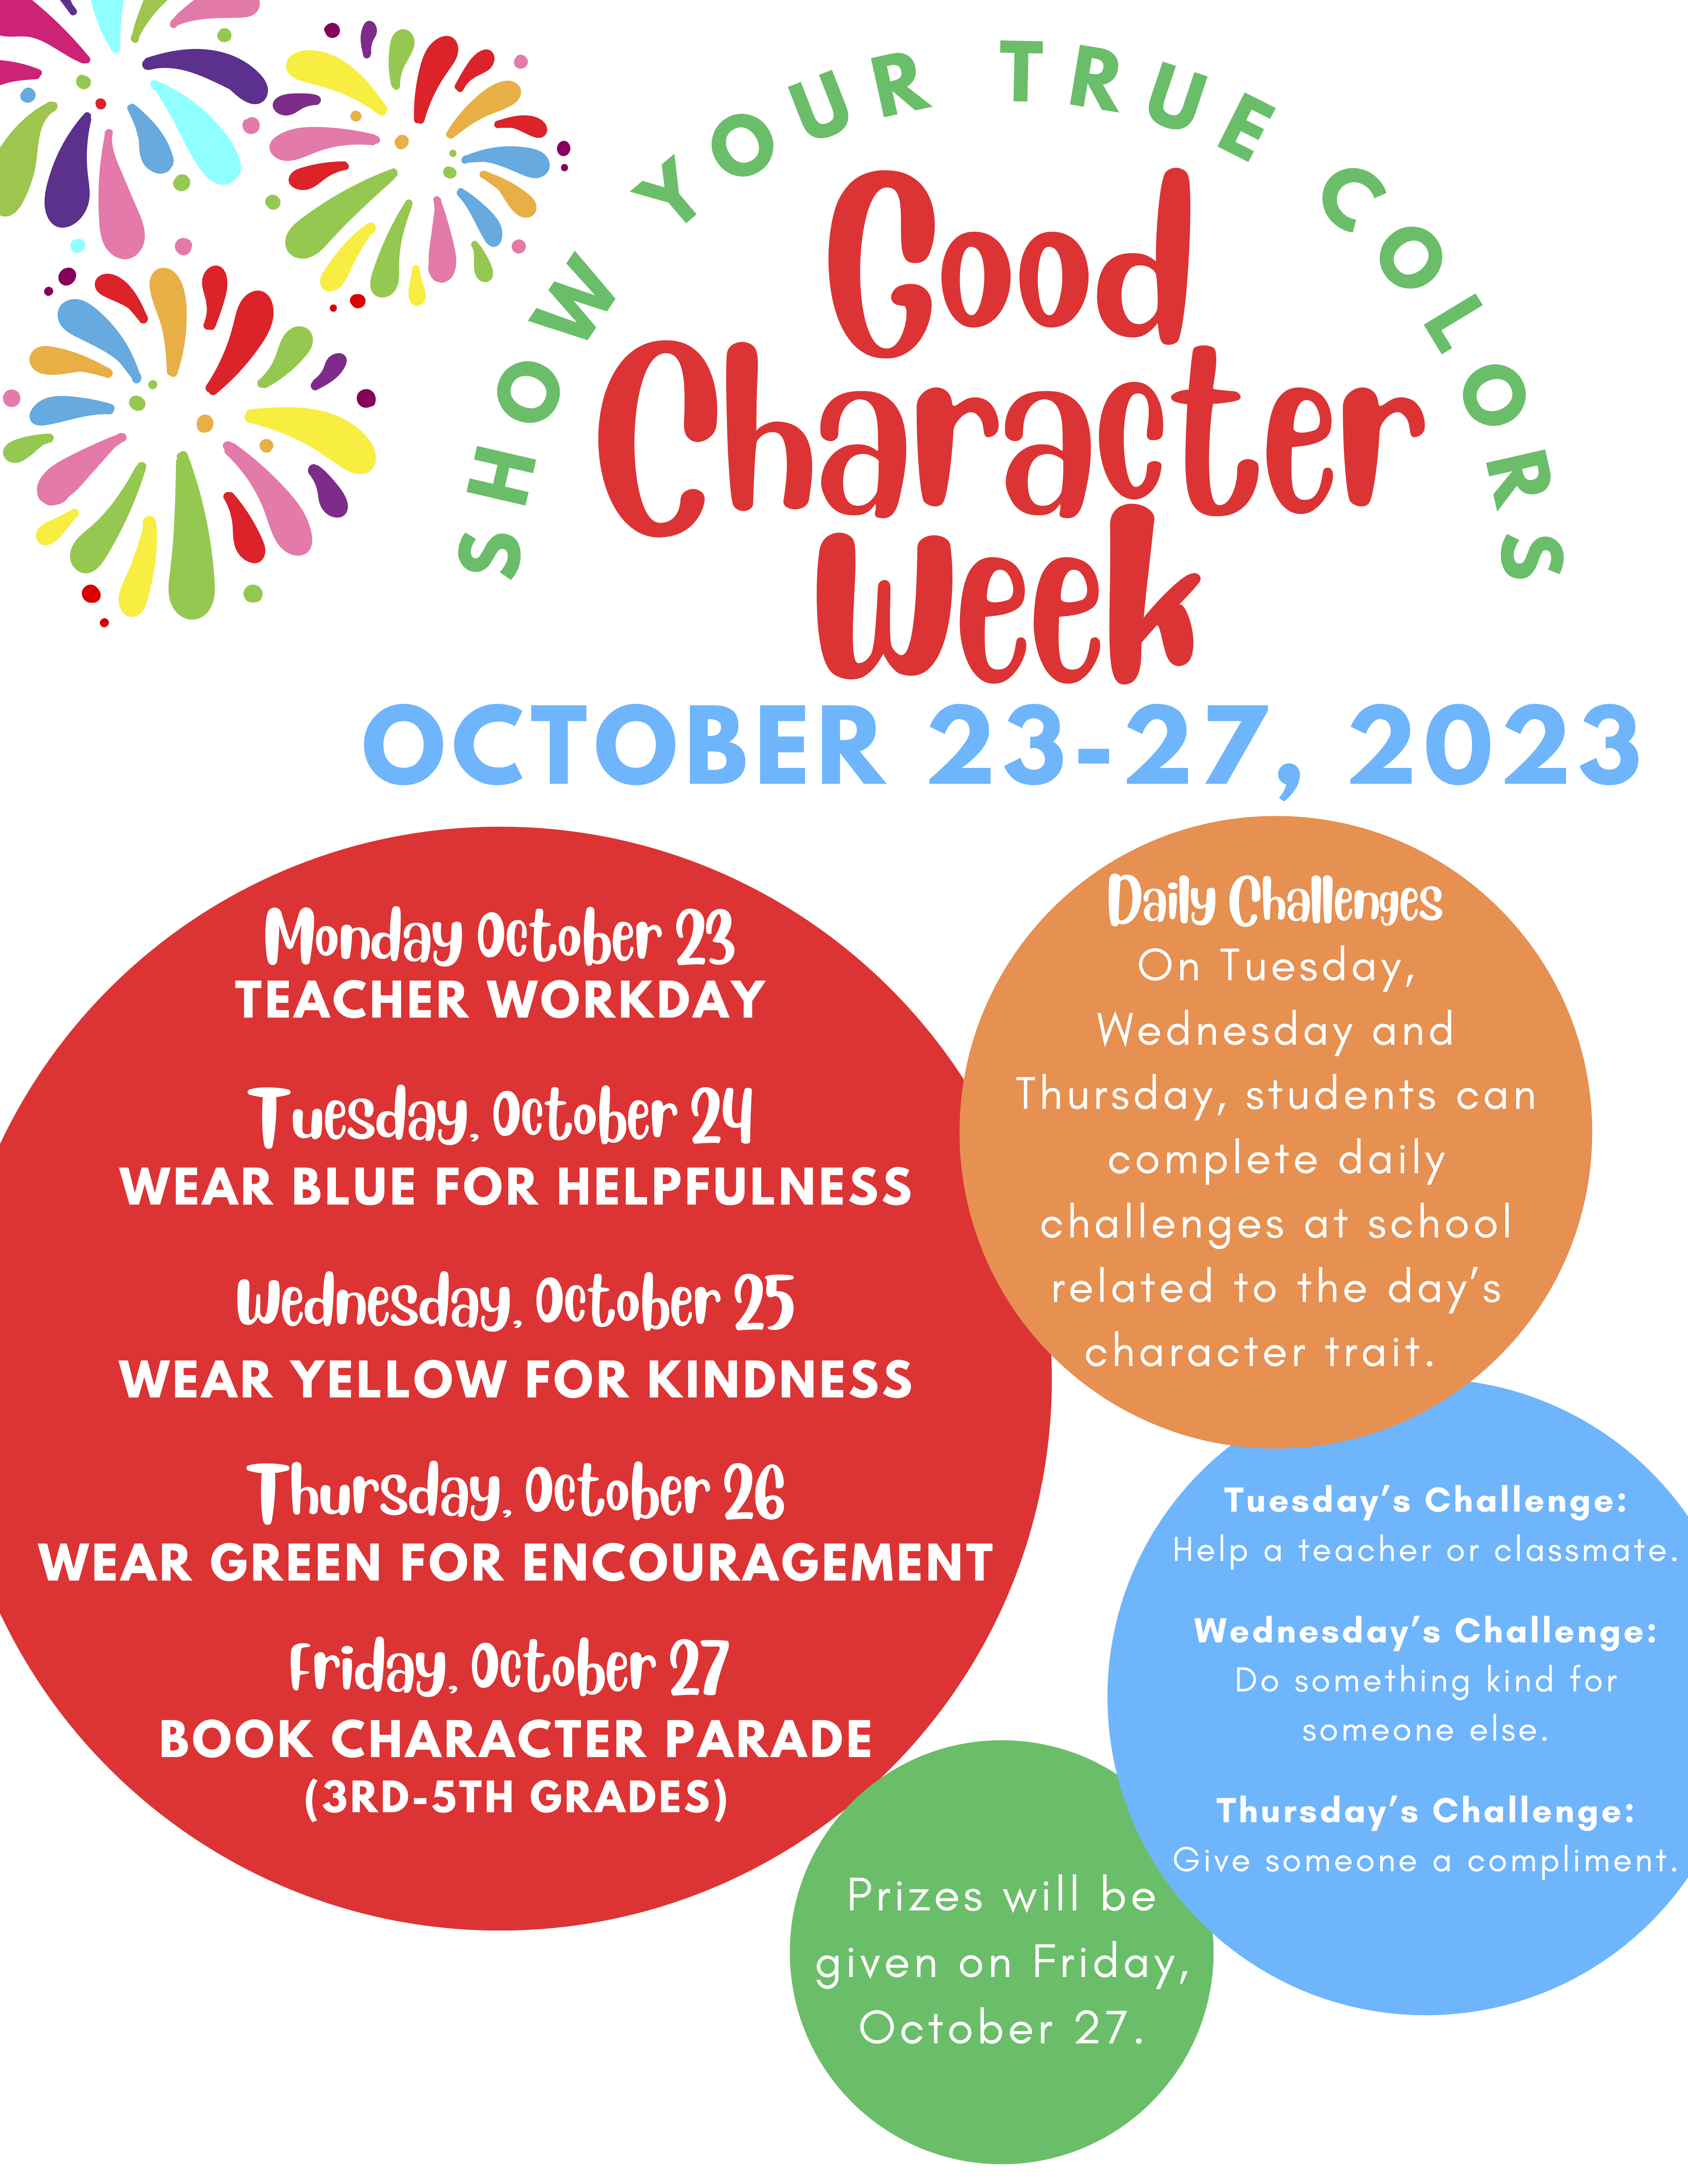 Good Character Week